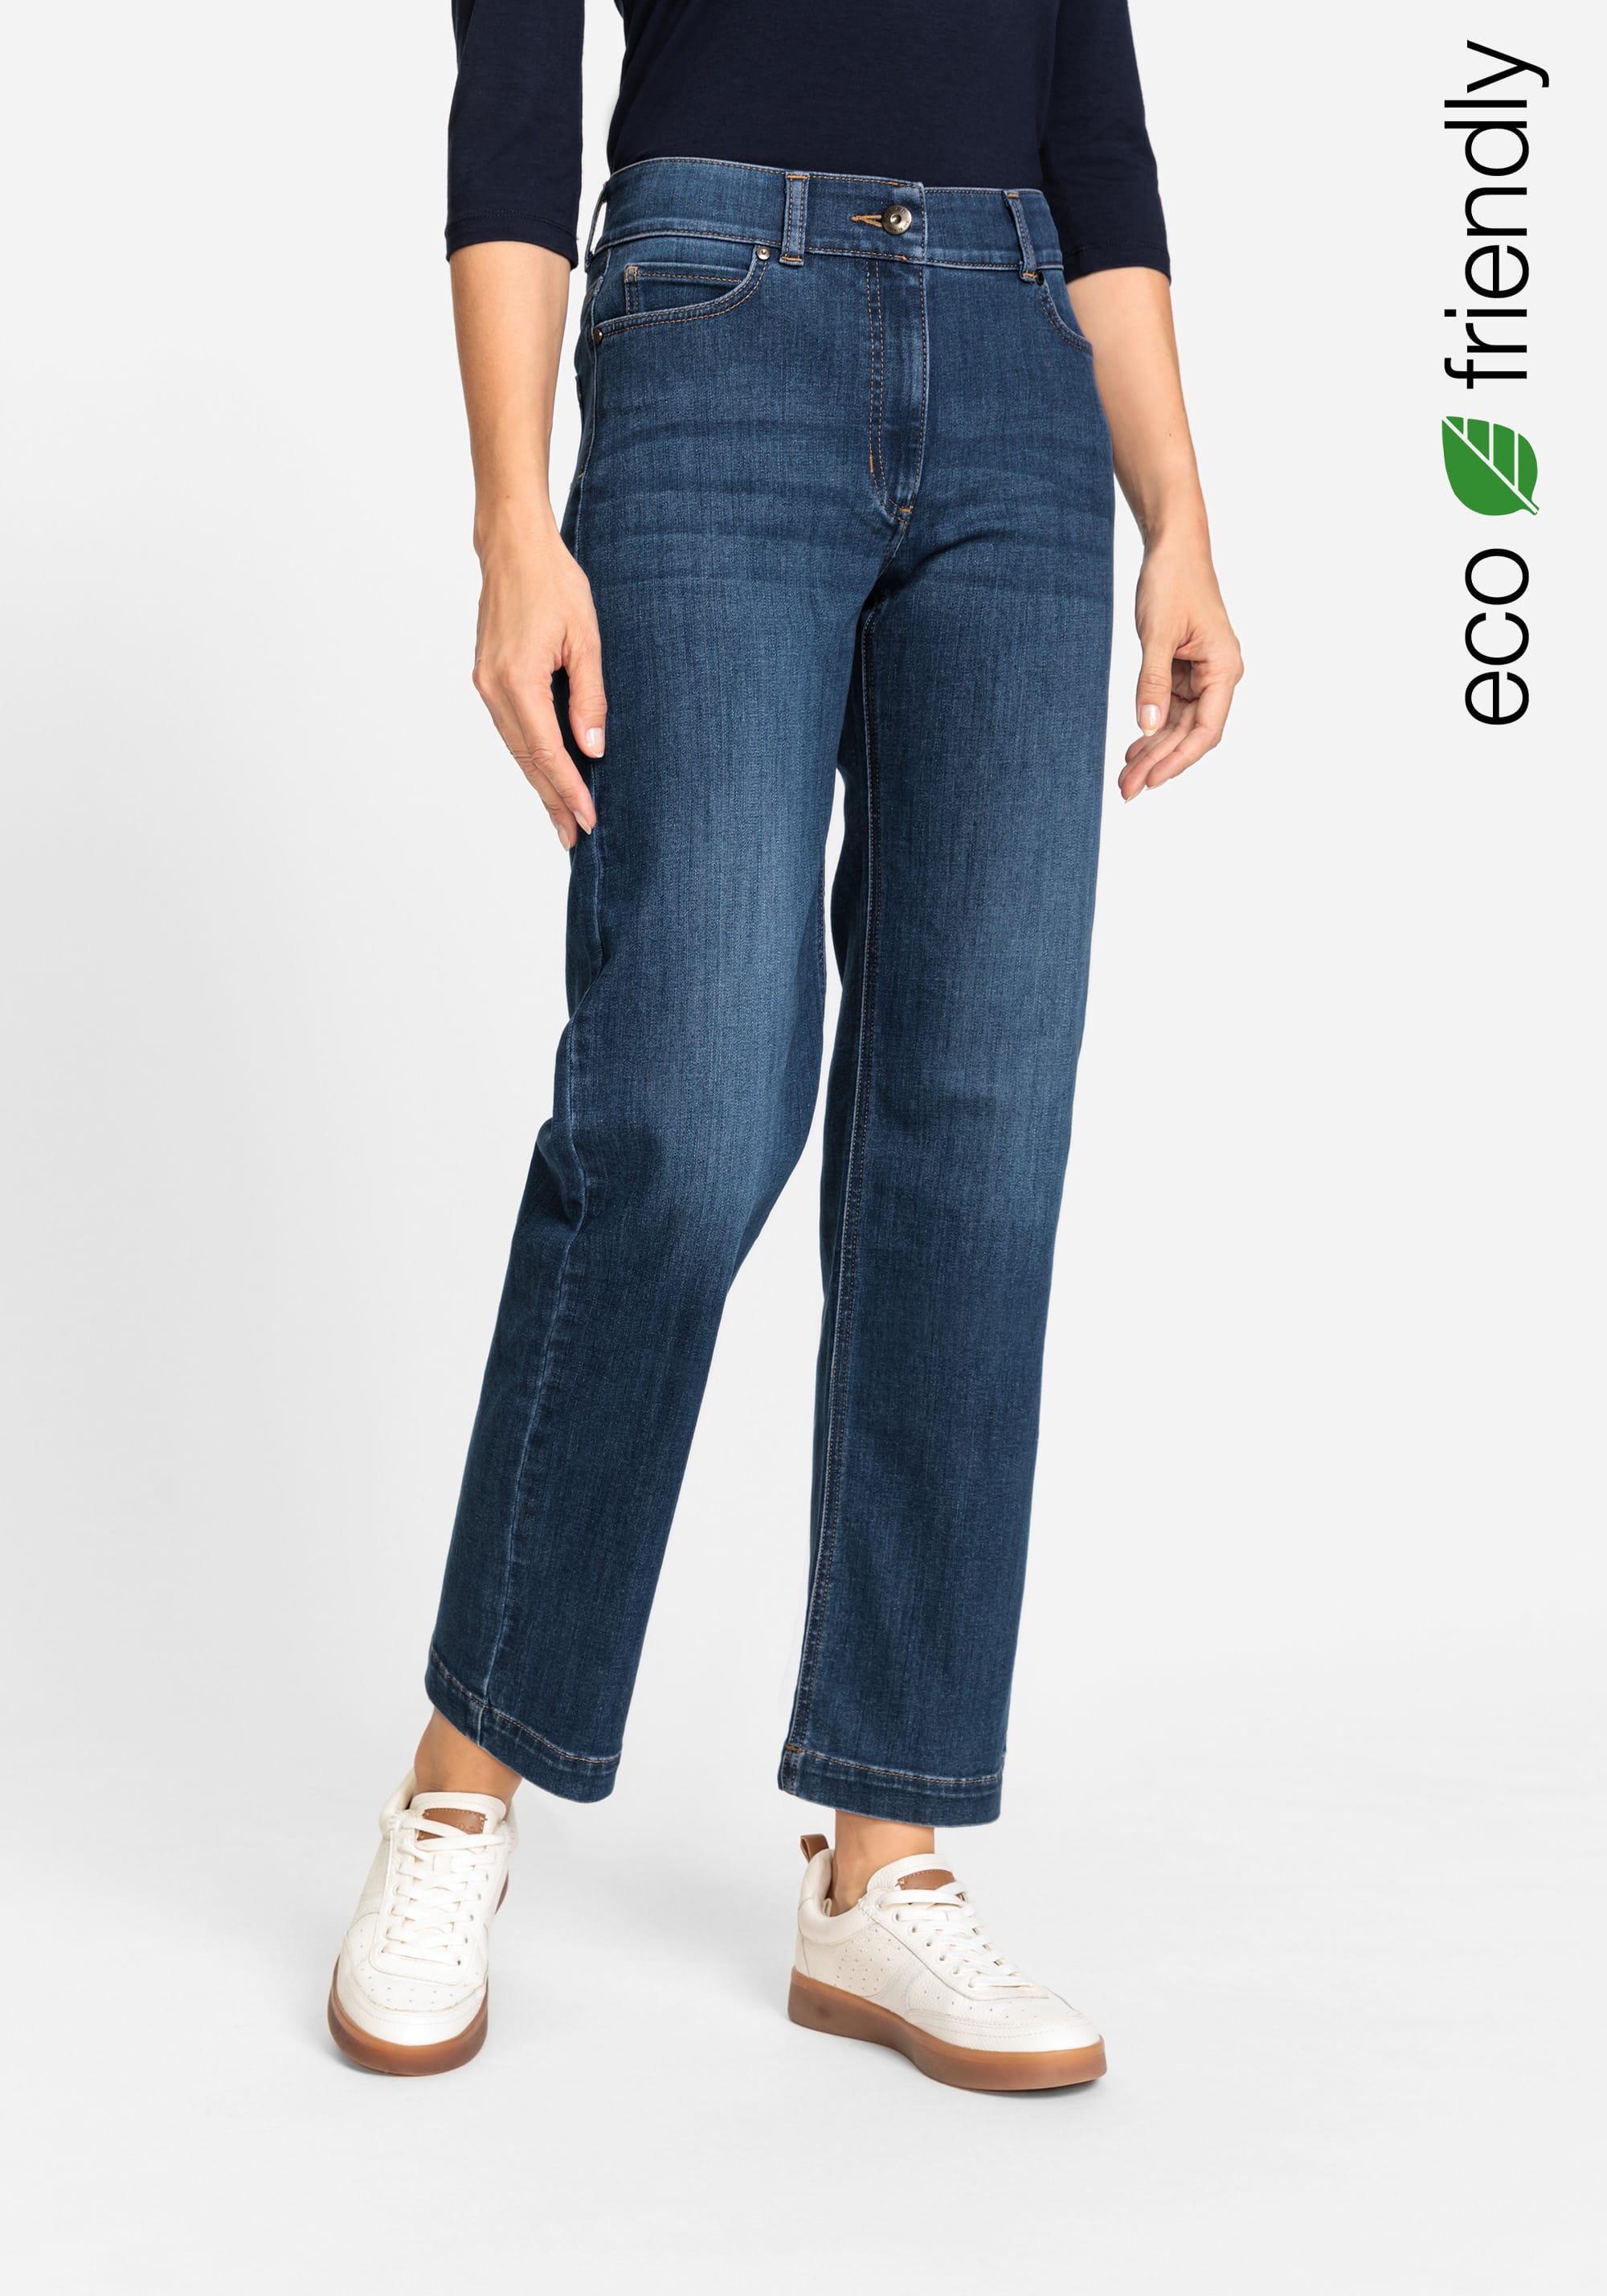 SPOGI Fever Collection Side Pocket Jean